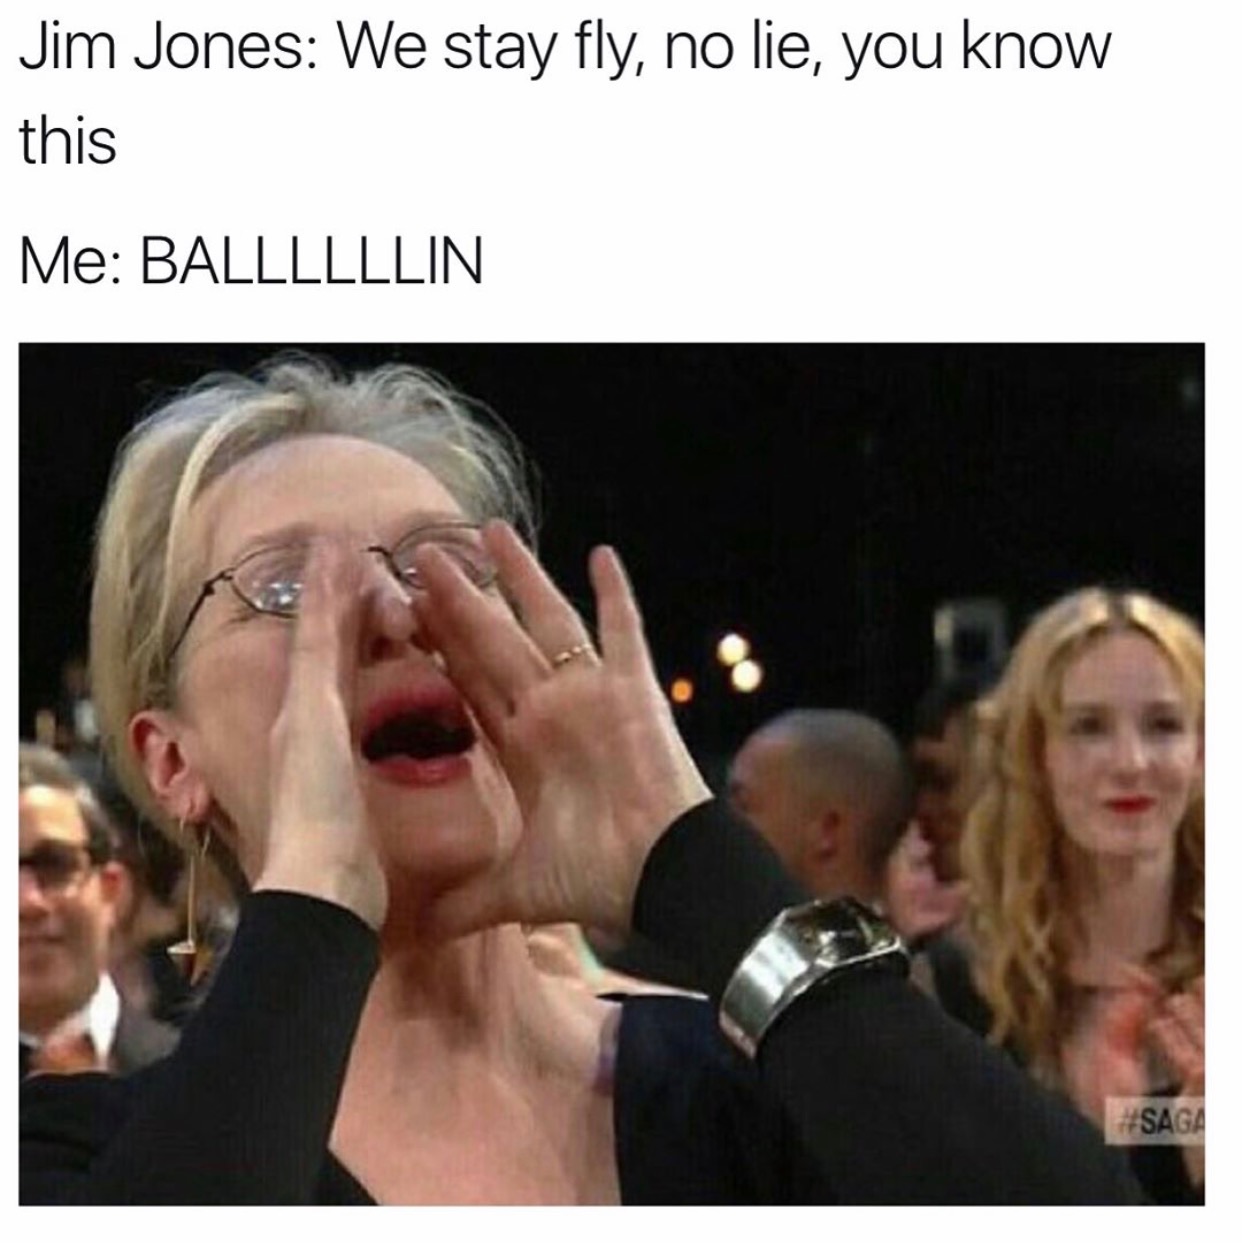 memes - meryl streep singing meme 2017 - Jim Jones We stay fly, no lie, you know this Me Ballllllin